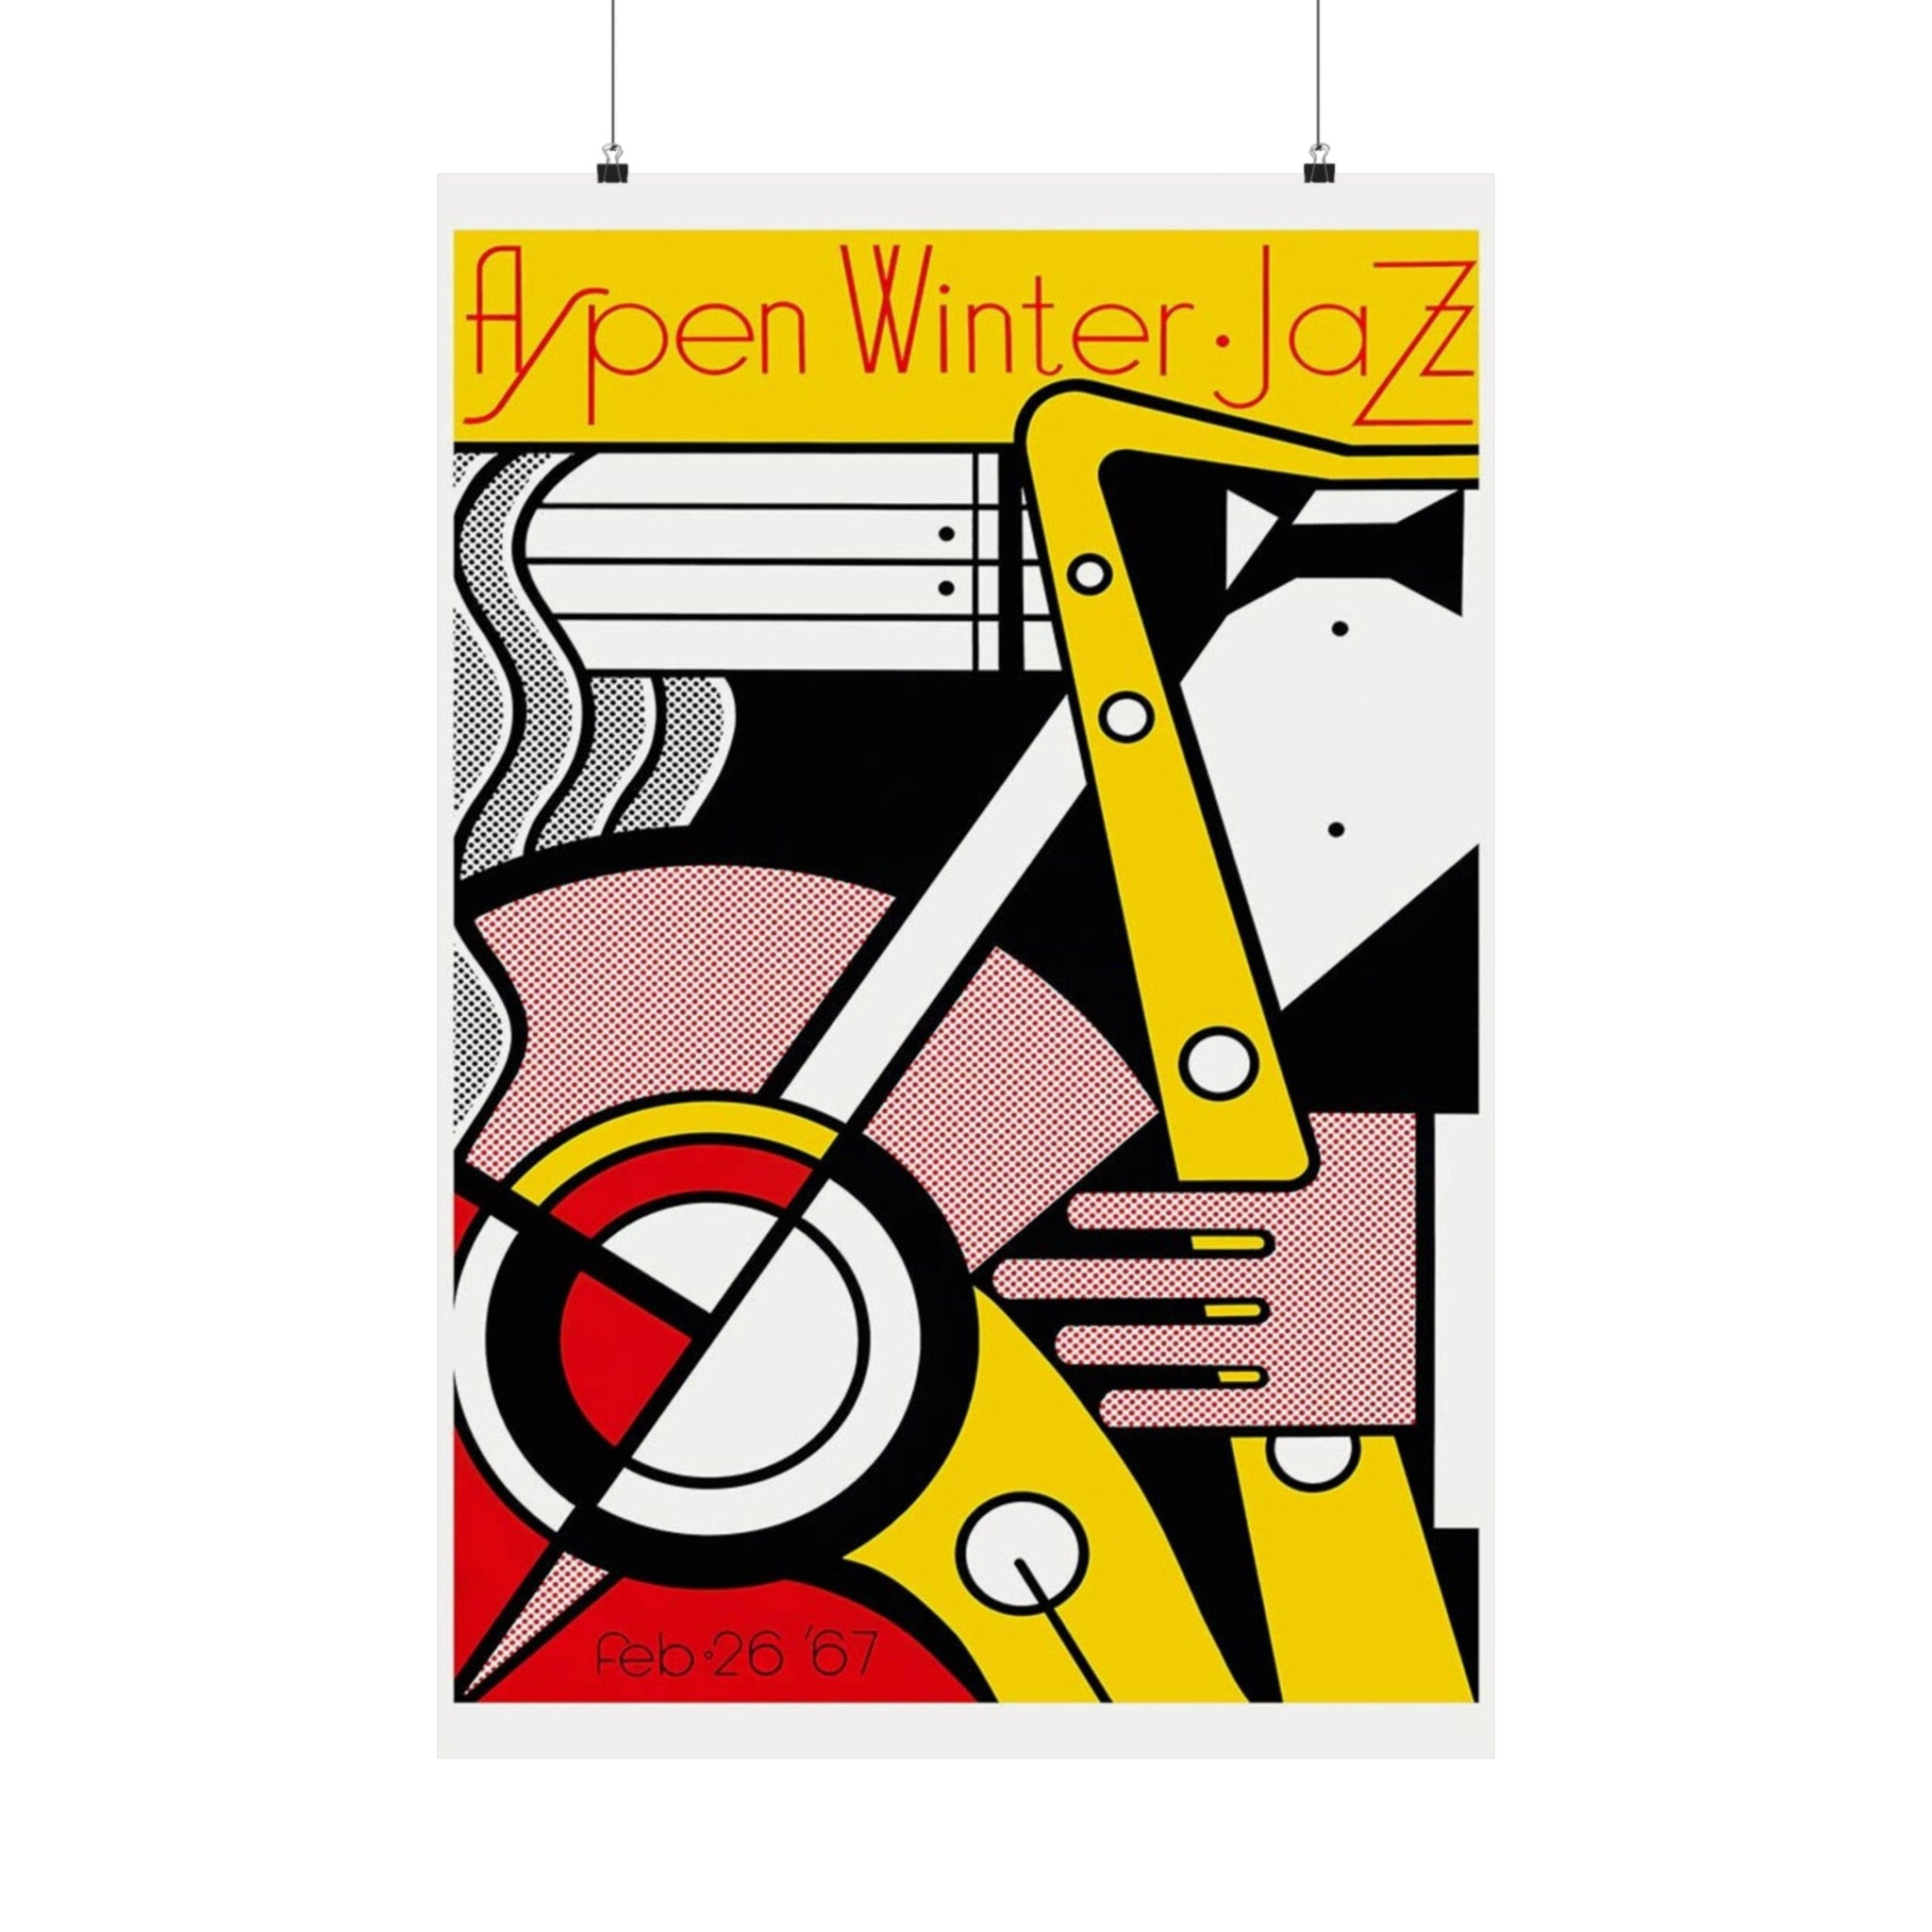 Aspen Winter Jazz Wall Print | Retro Advertising Print